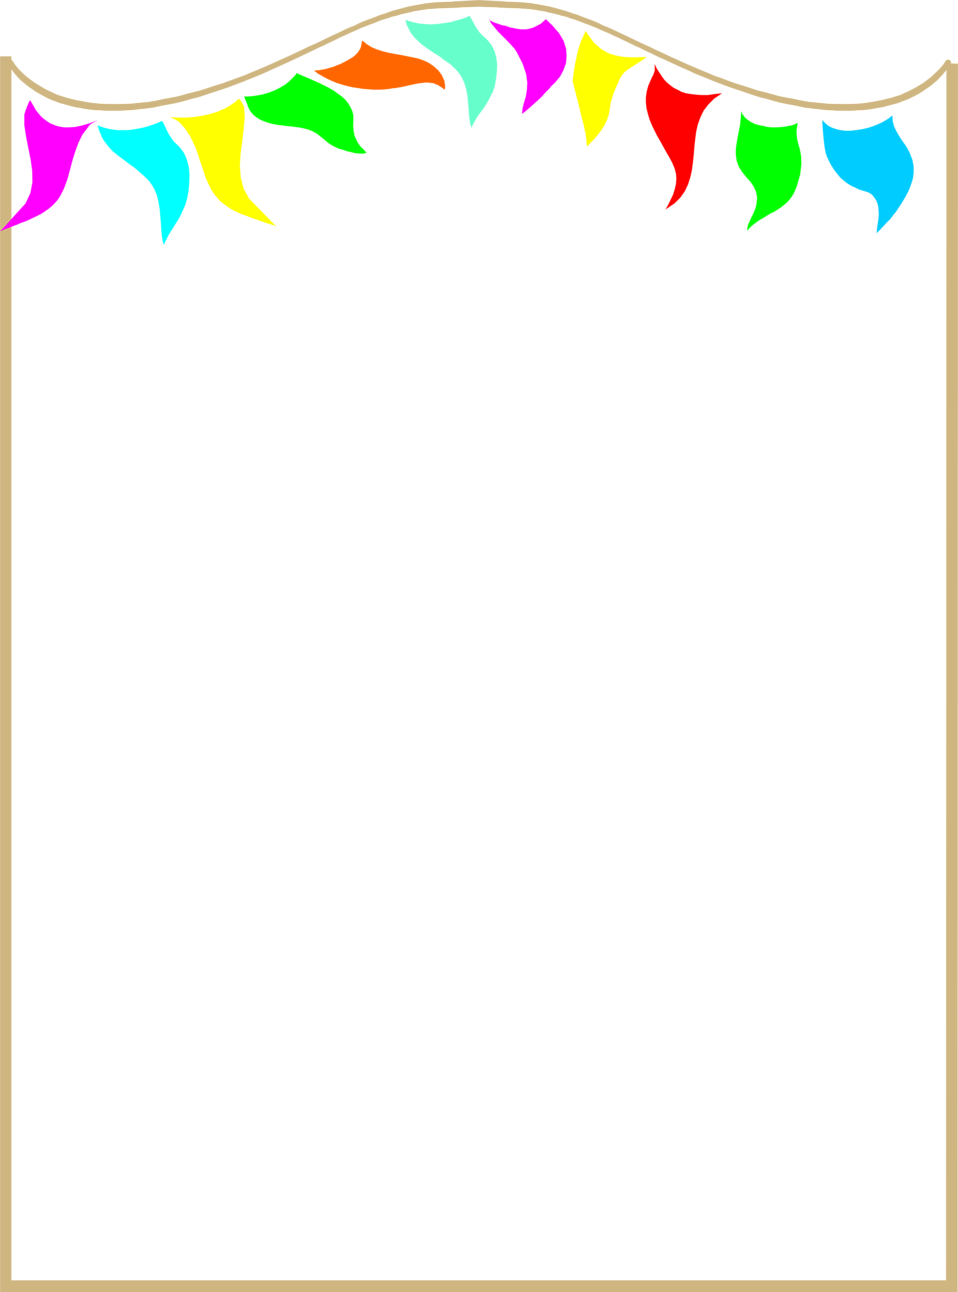 Clipart umbrella border. Illustration of a blank